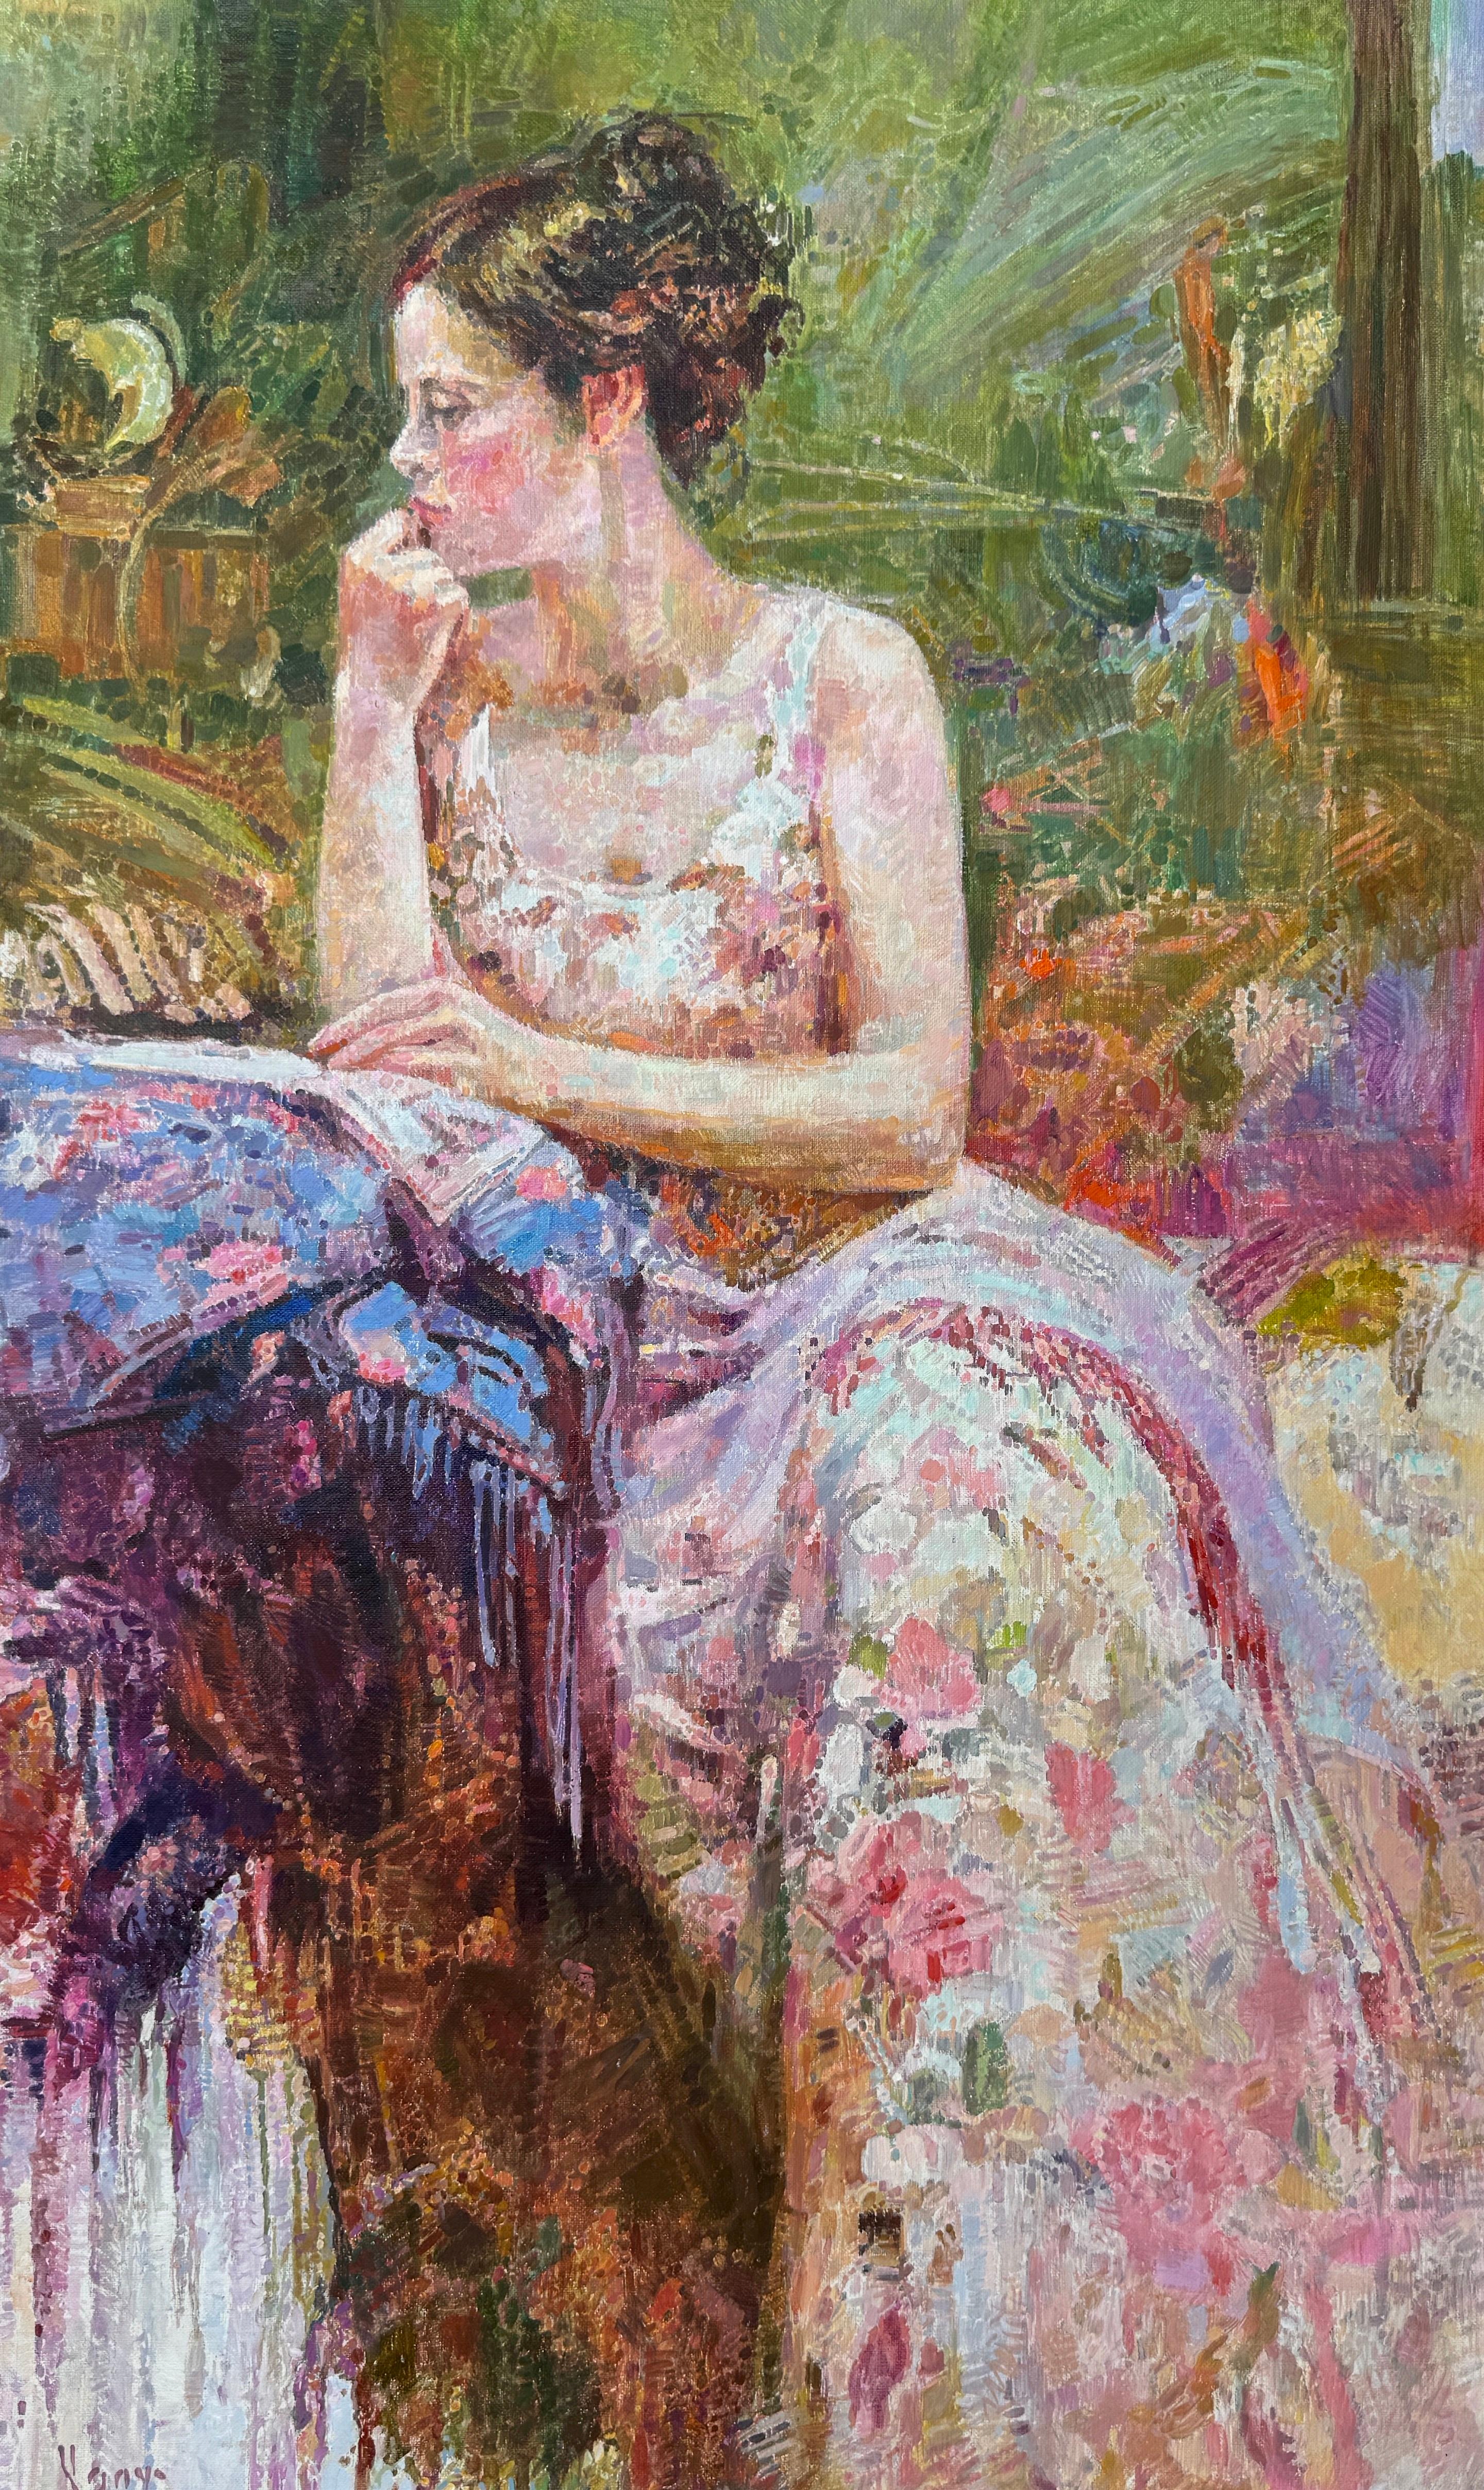 Rest, Women Portrait, Original Oil Painting, Handmade Artwork, One of a Kind